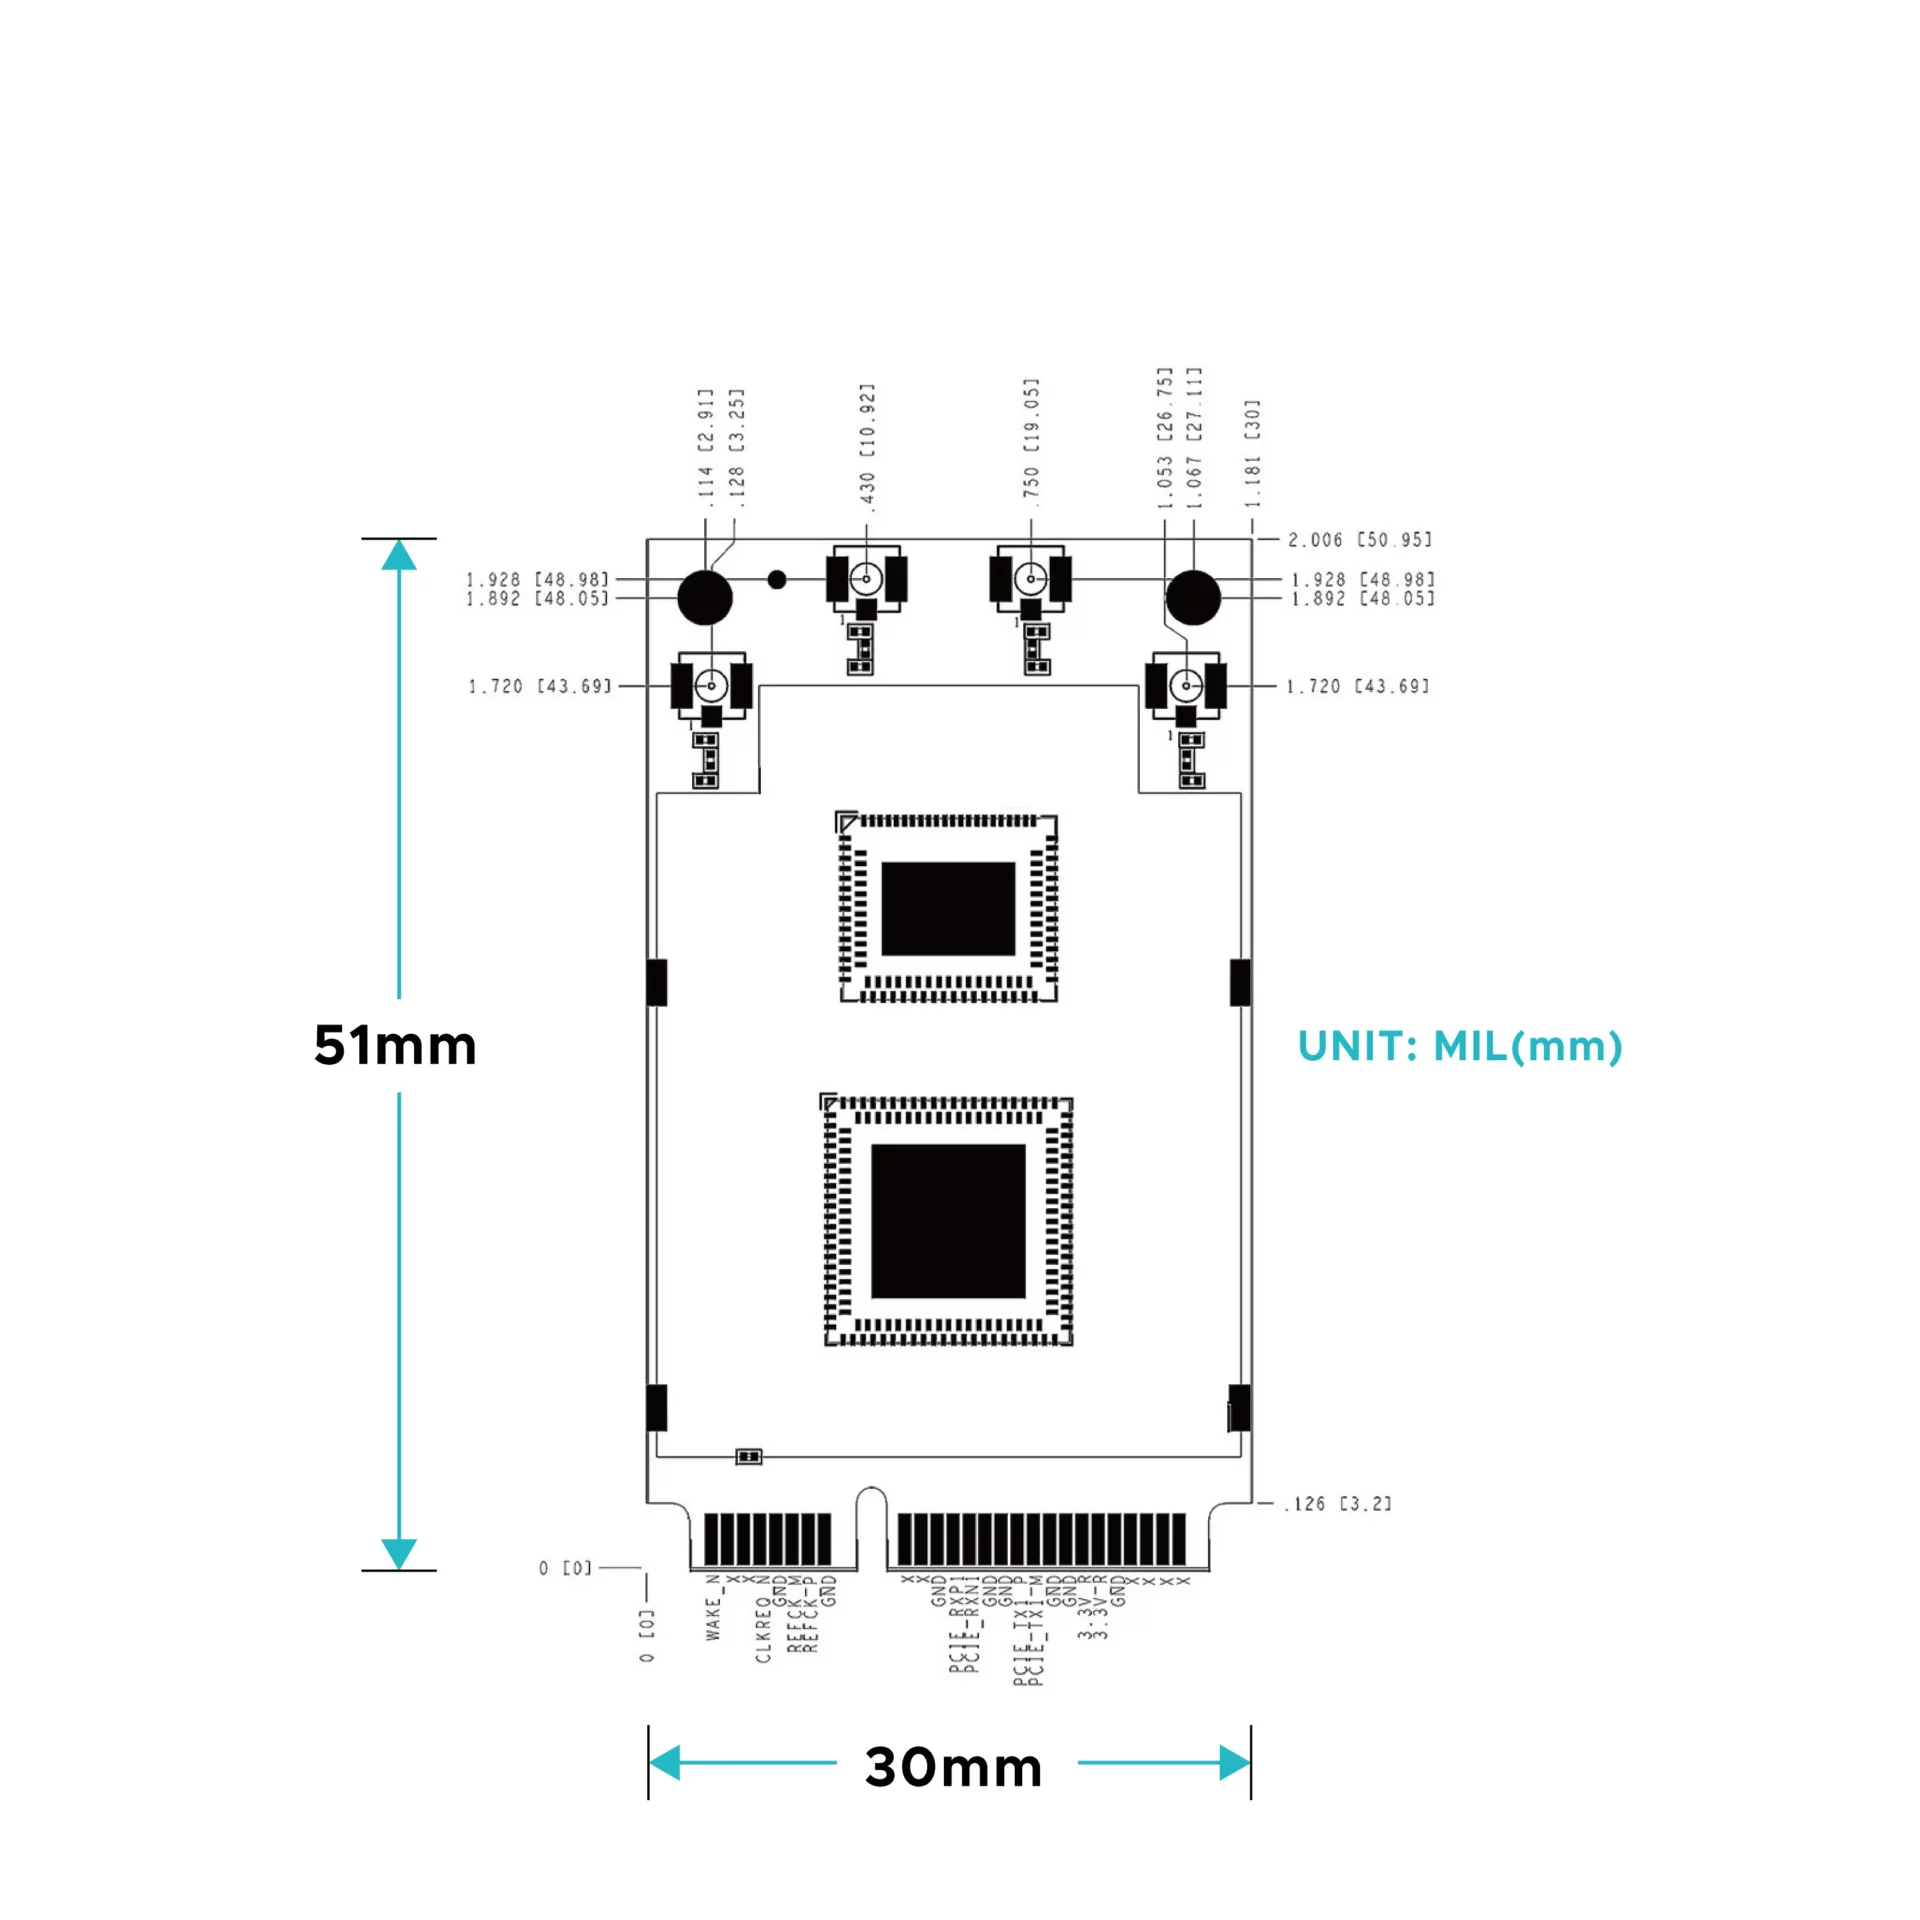 AW7915-NP1 Wi-Fi 6 11ax 4T4R Mini PCIe Module MT7915